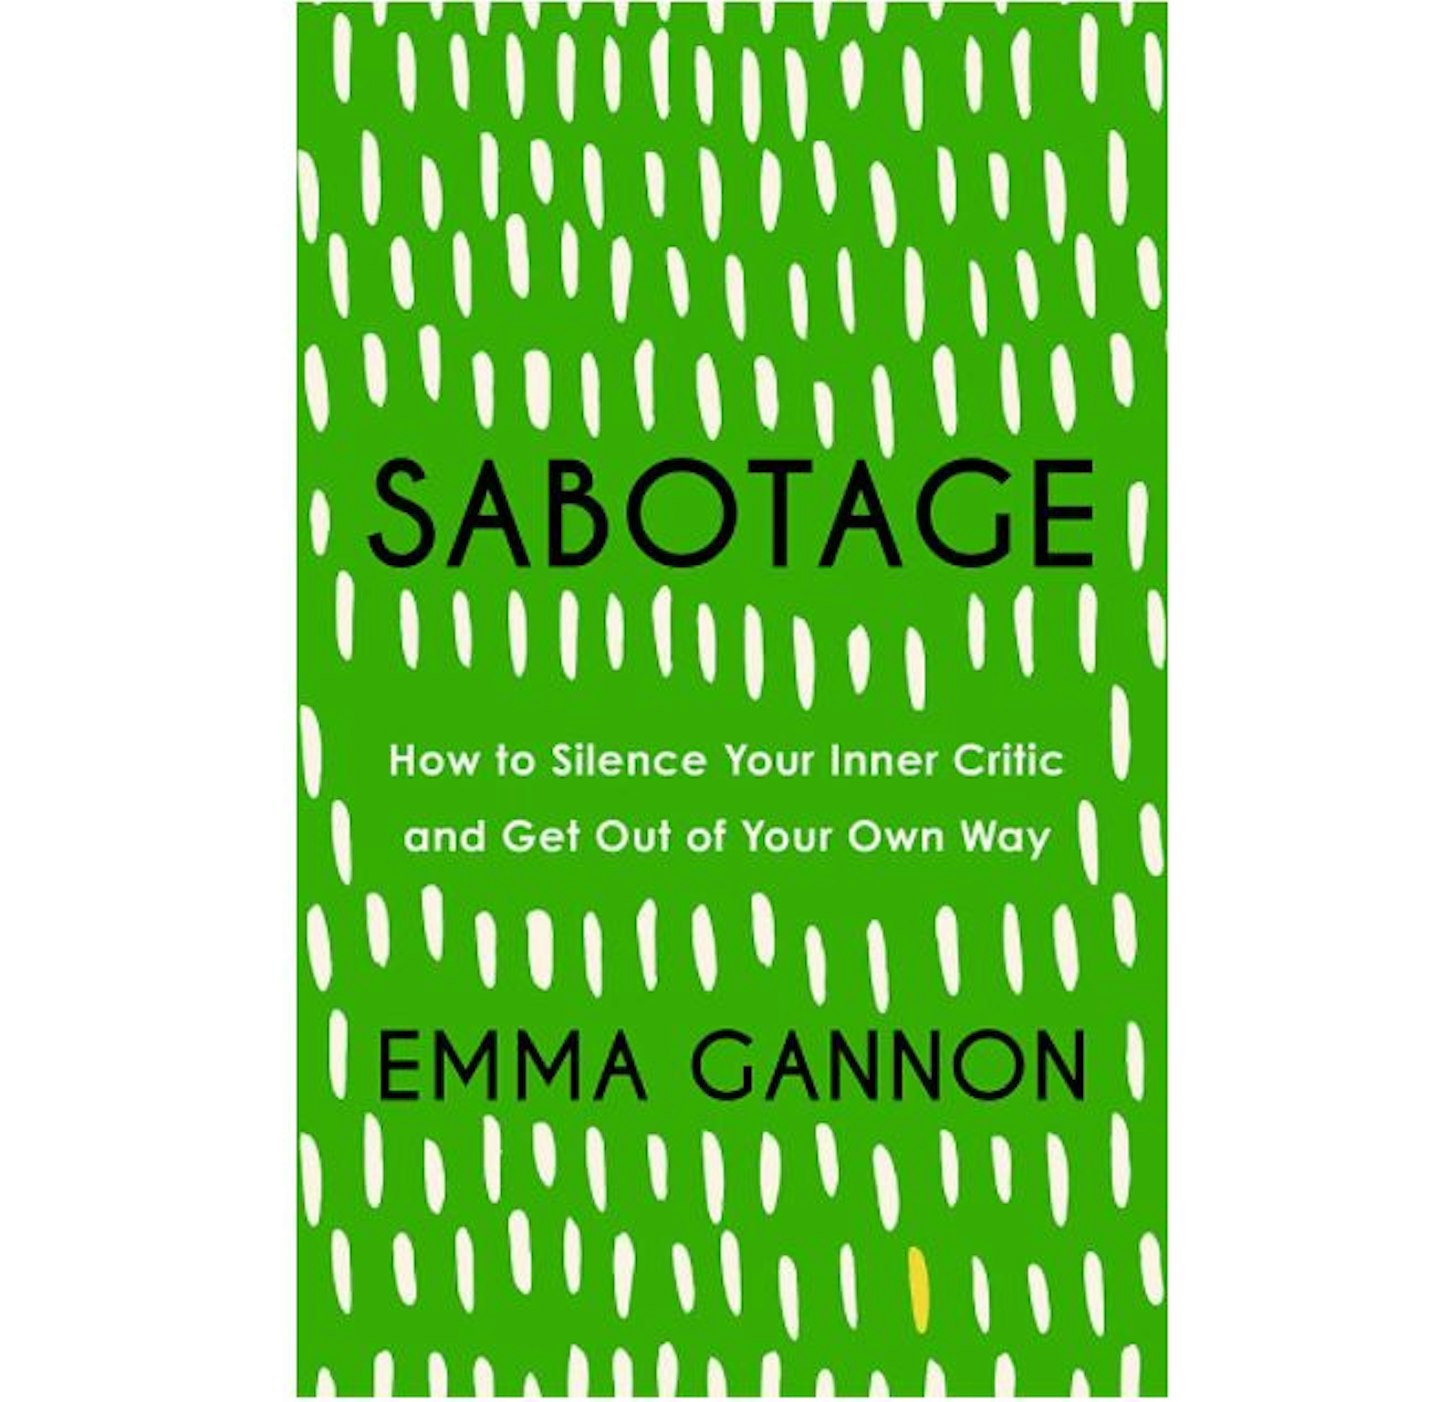 Sabotage by Emma Gannon